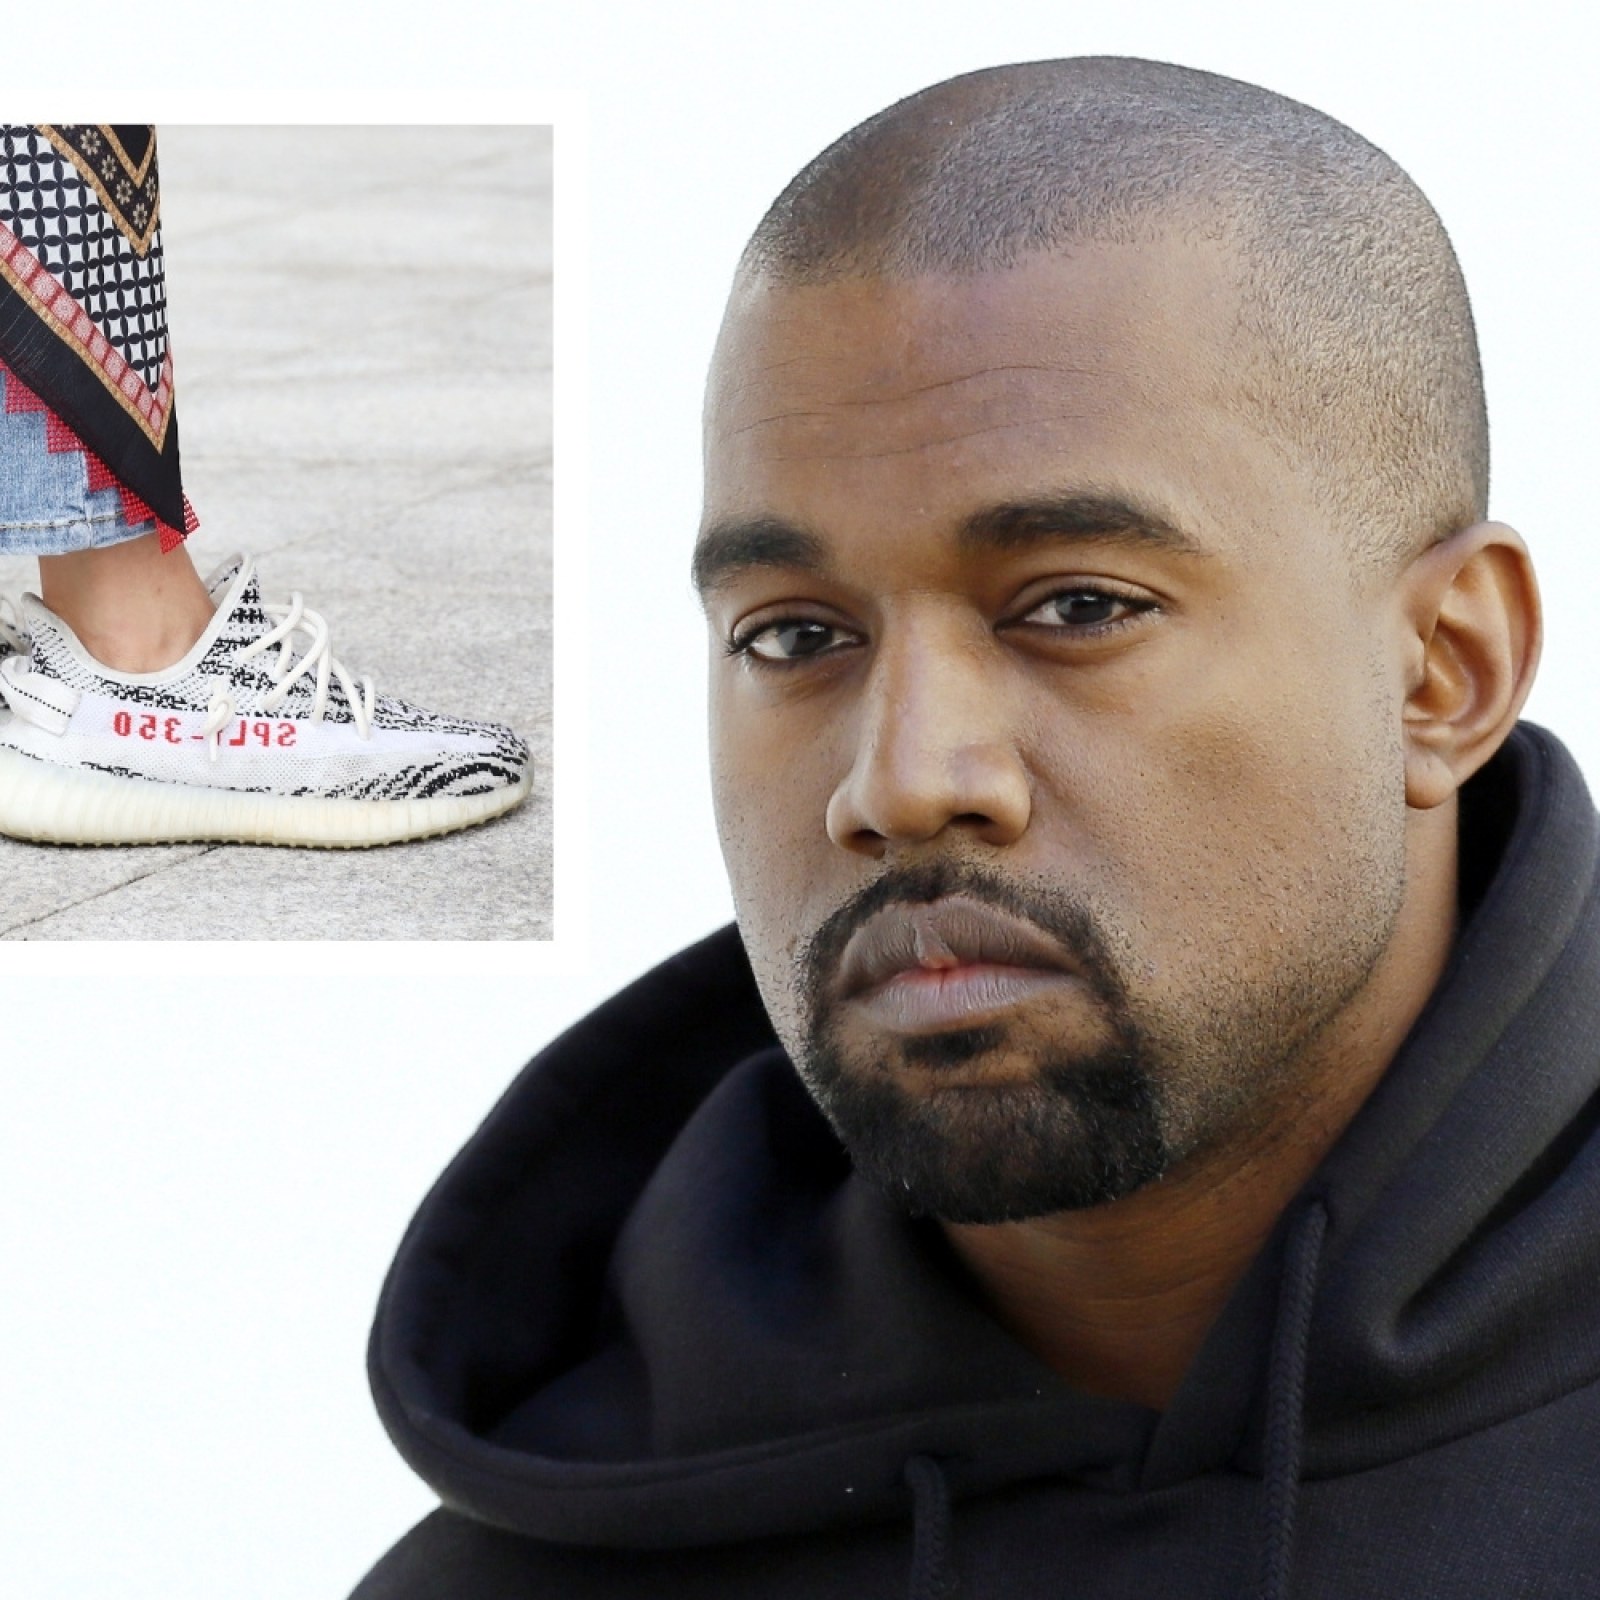 Will Adidas Stop Making Yeezys? - Shoe Effect